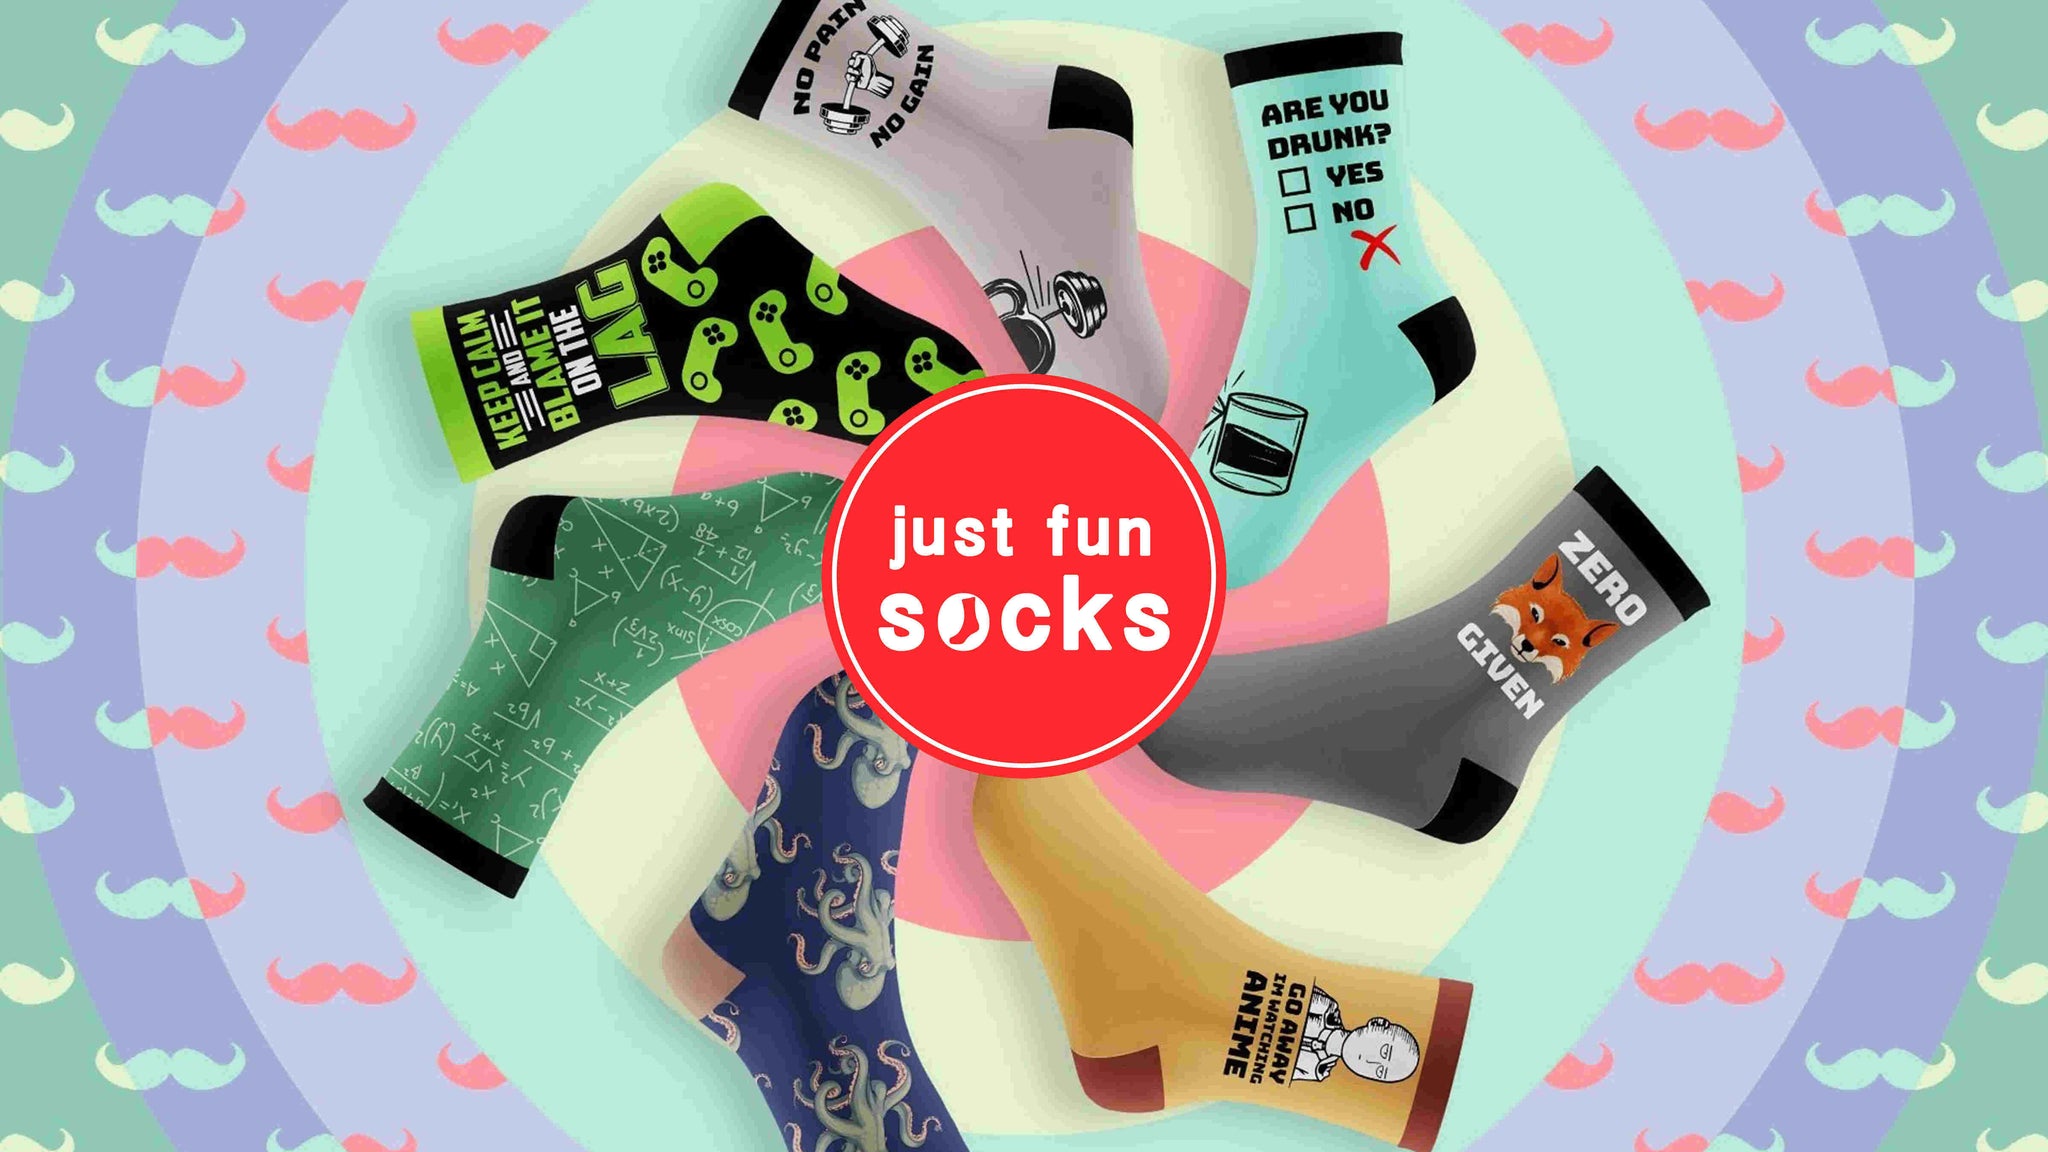 Funny Animal Paw Socks, 6 Pair Crazy Socks Cat Claw Socks Novelty